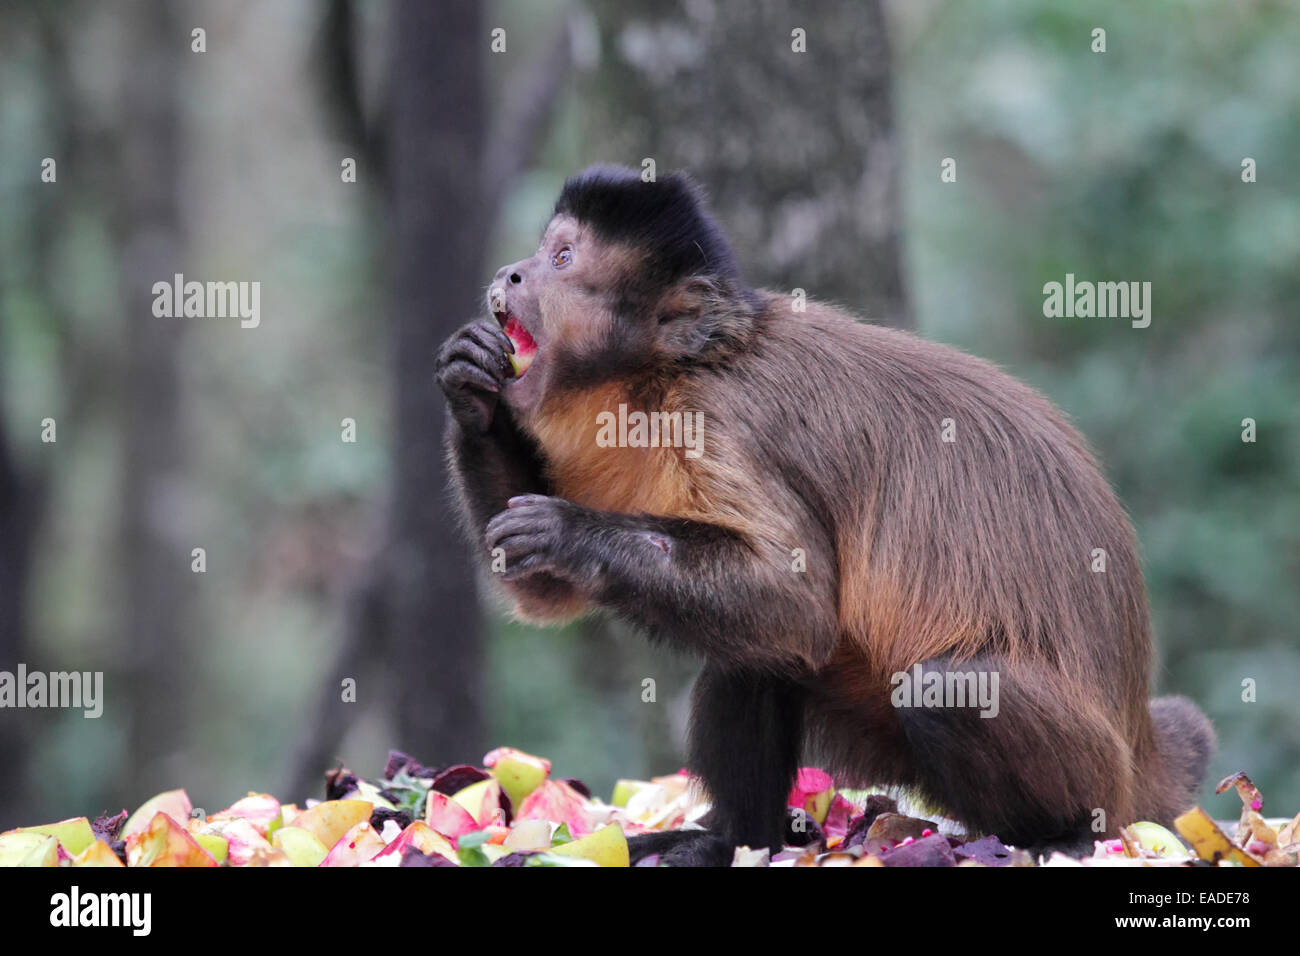 Tufted capuchin (Cebus apella) eating fruit. Stock Photo